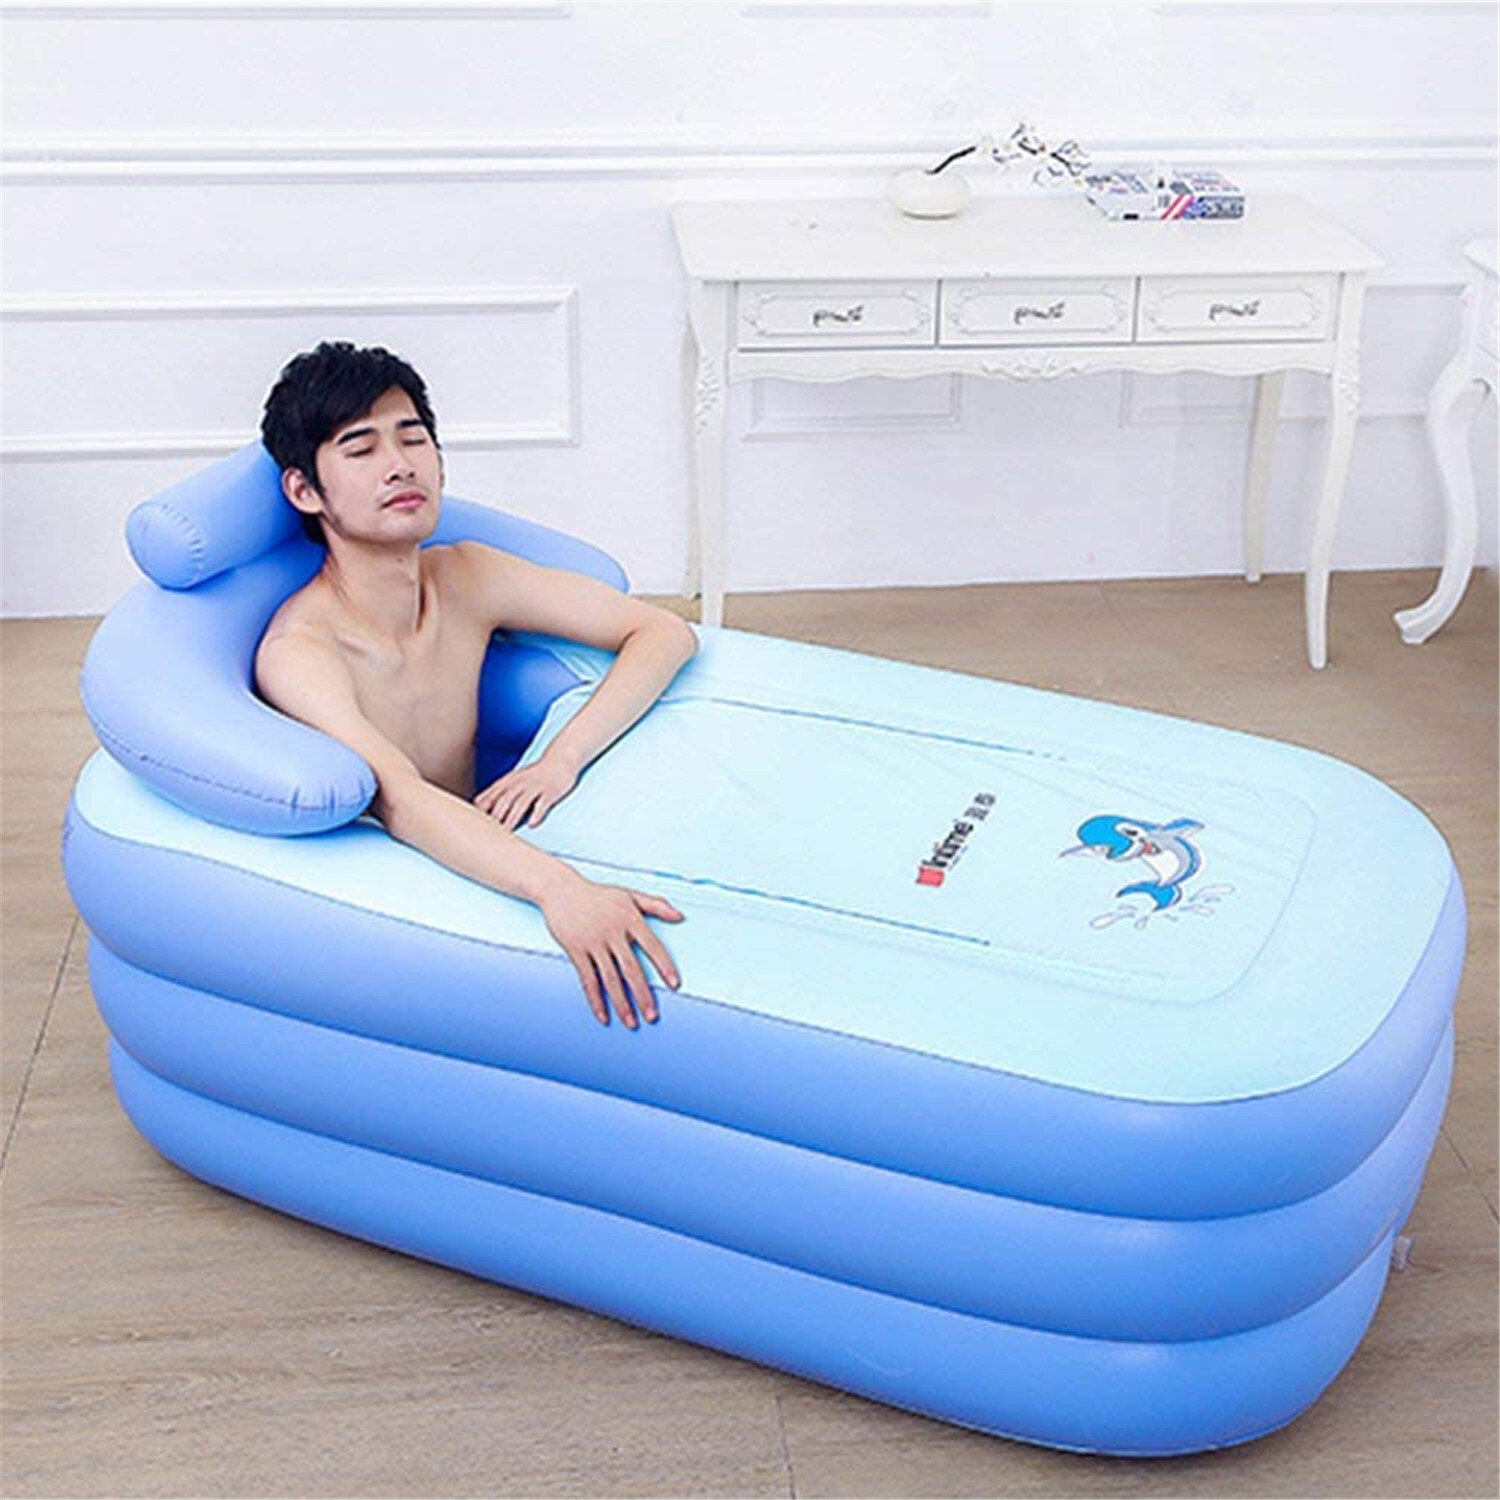 Brand Umi Inflatable Portable Bathtub White Durable Soaking Bath Tub with Large Backrest Freestanding Inflatable Pool Bathroom Home Spa